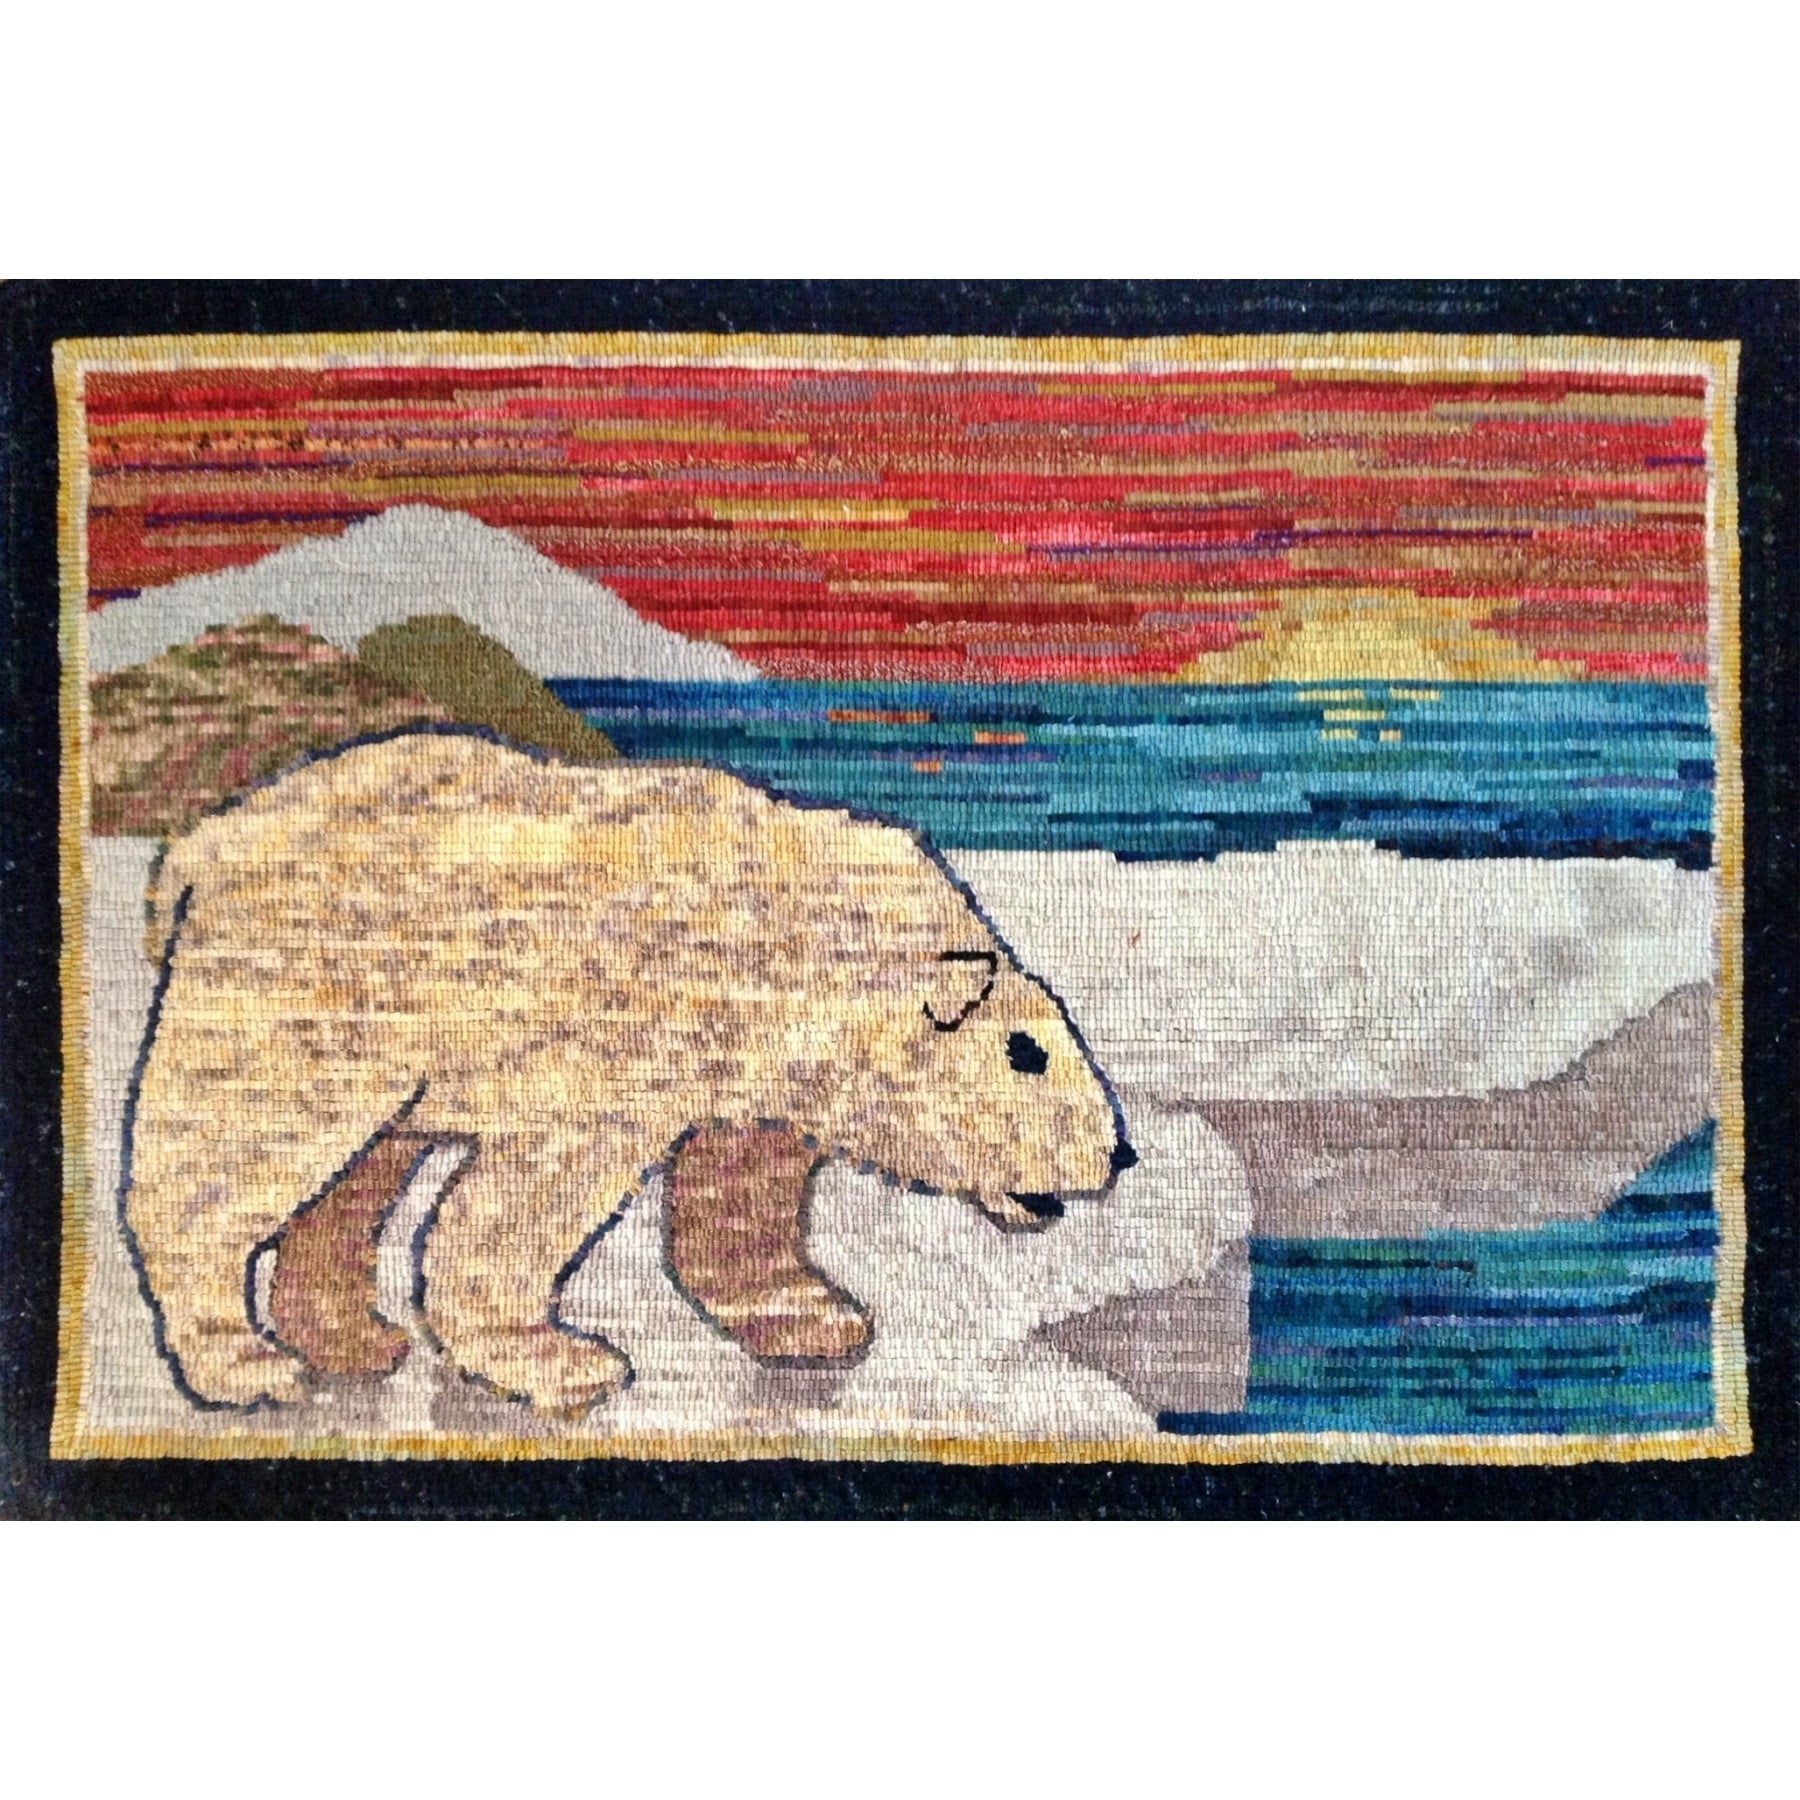 Polar Bear-Grenfell Style, rug hooked by Mary Schnitzler